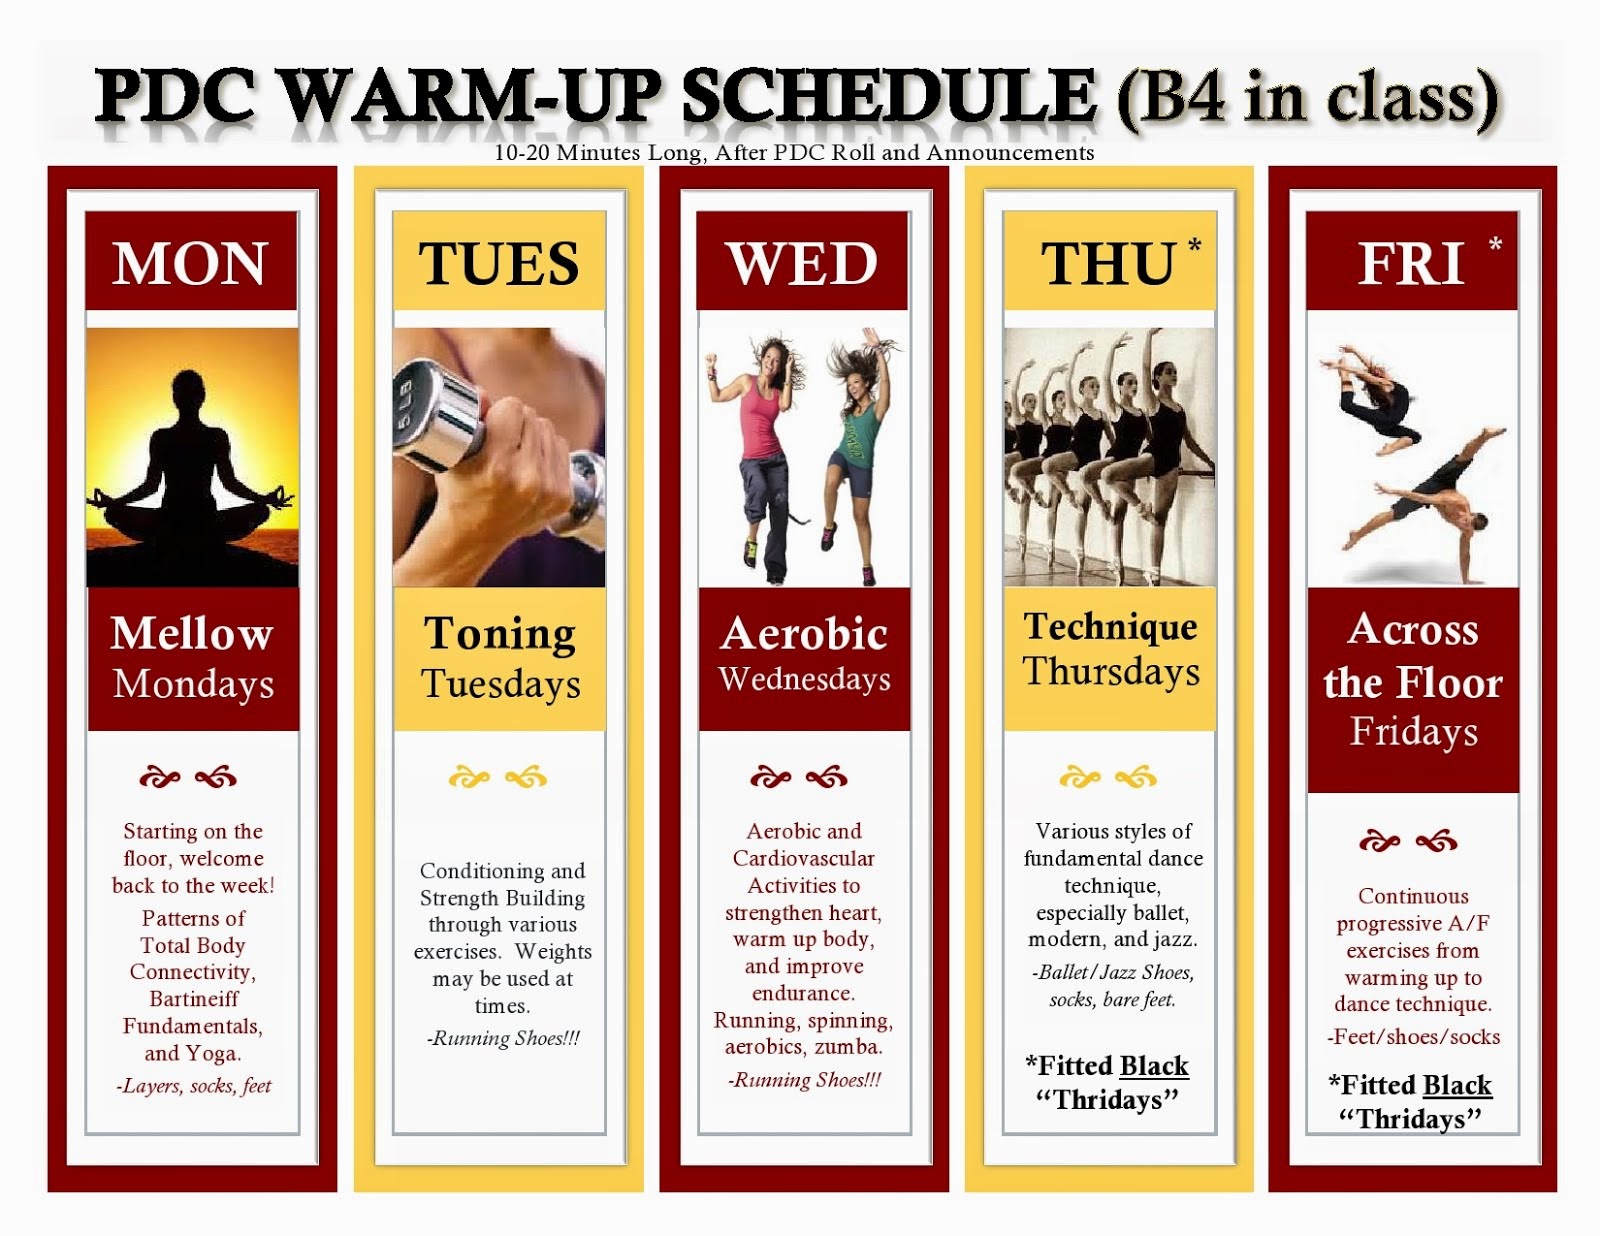 PDC Warm-Up Schedule